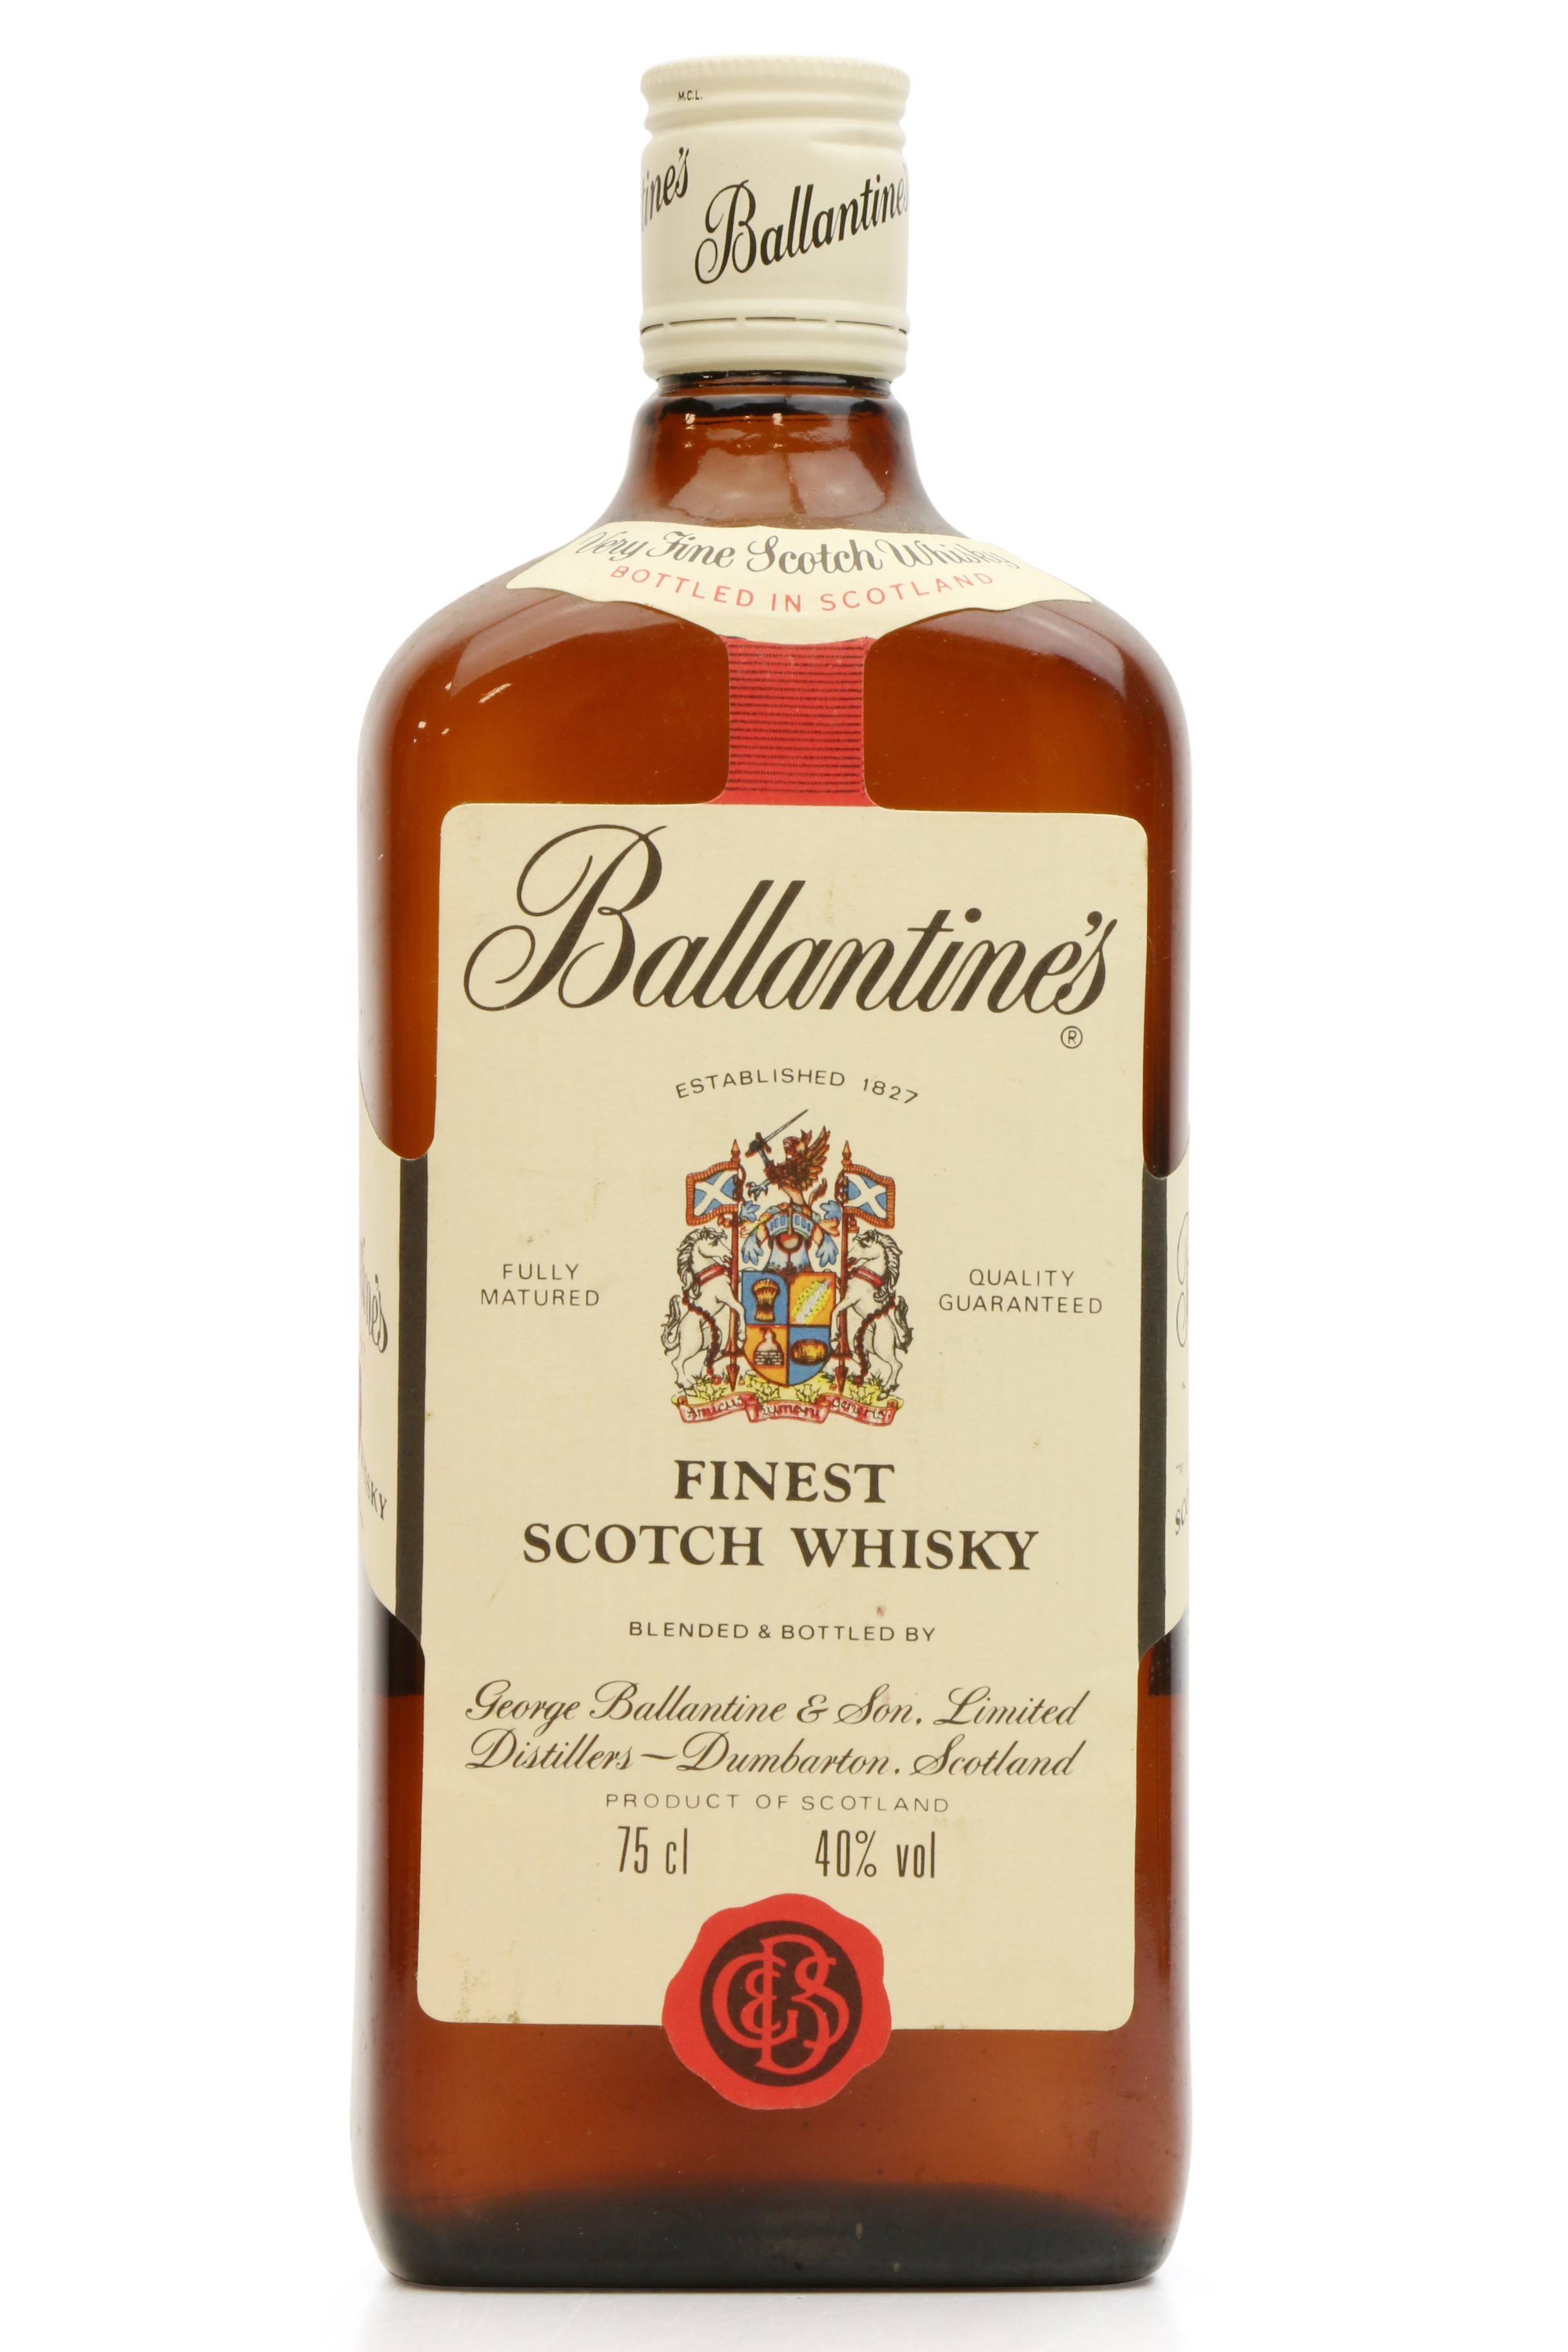 Whisky Ballantine's Finest - 40° 200 cl